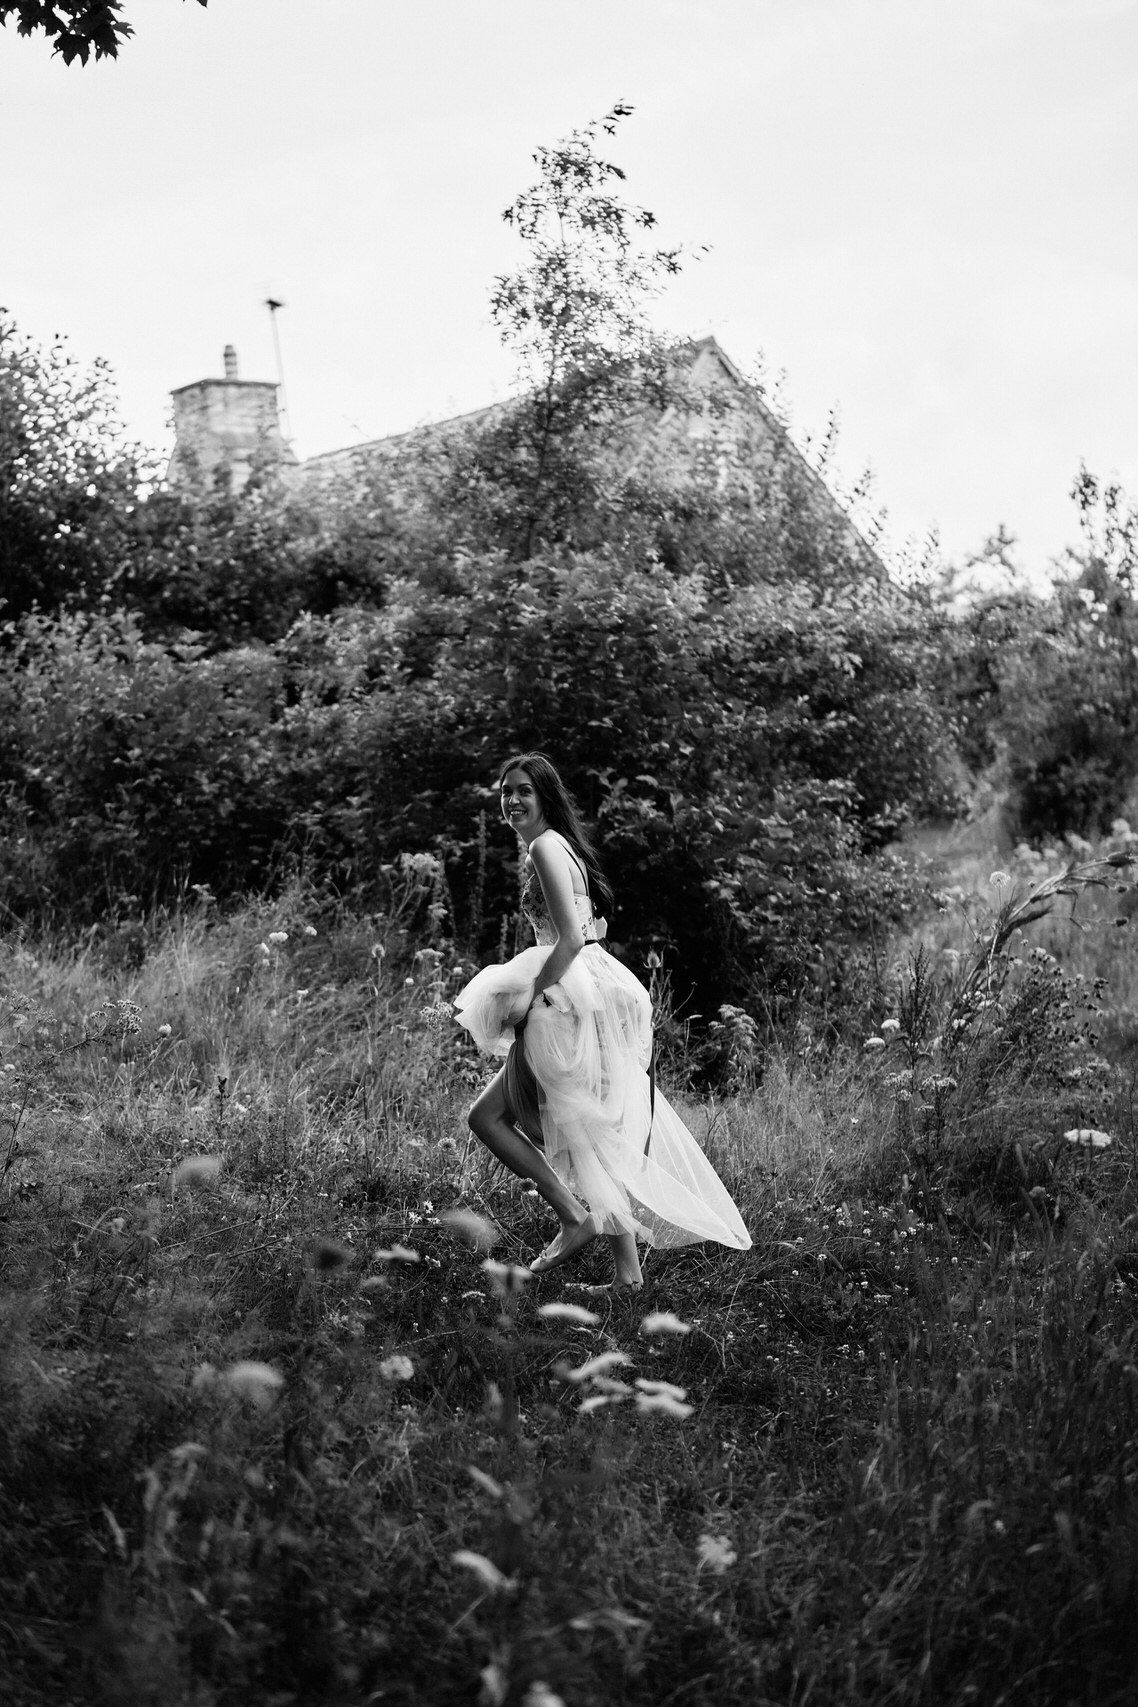 A woman in a white wedding dress is running across a field.